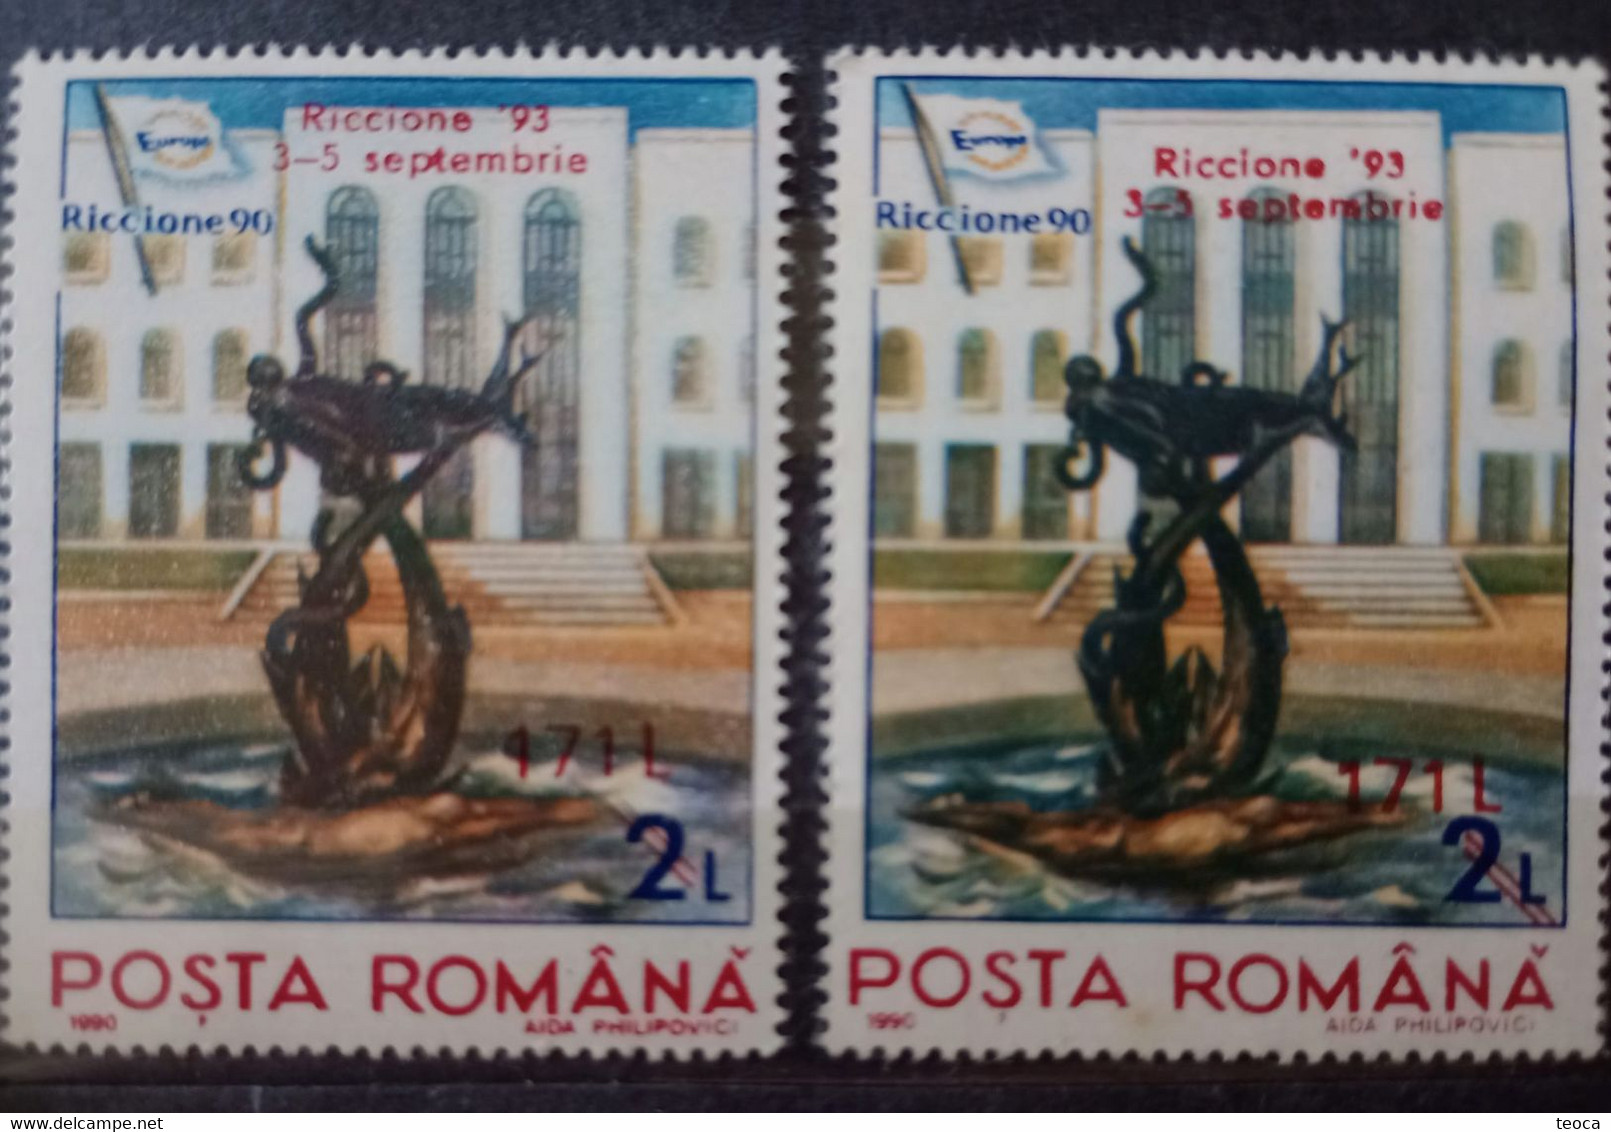 Stamps Errors Romania 1993, # Mi 4922 Printed With Misplaced Surcharge, DIFFERENT COLOR Unused Riccione - Variétés Et Curiosités